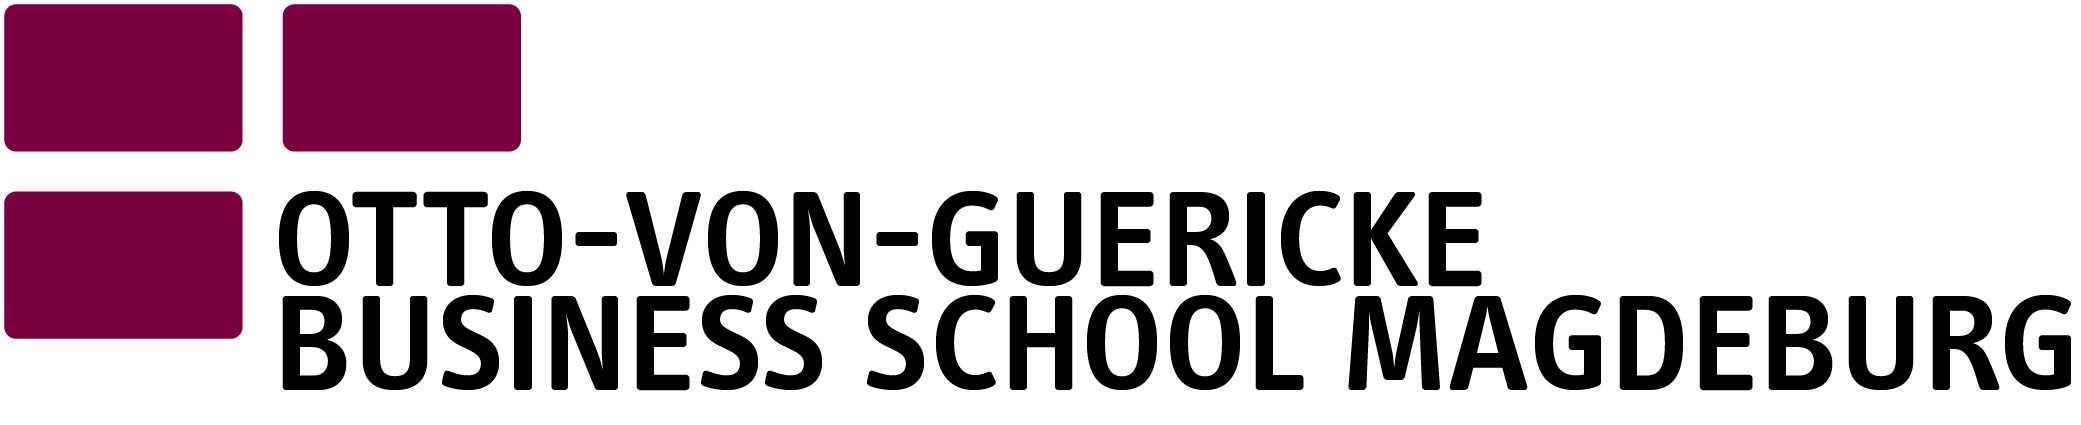 otto-von-guericke-business-school-magdeburg-cover-picture